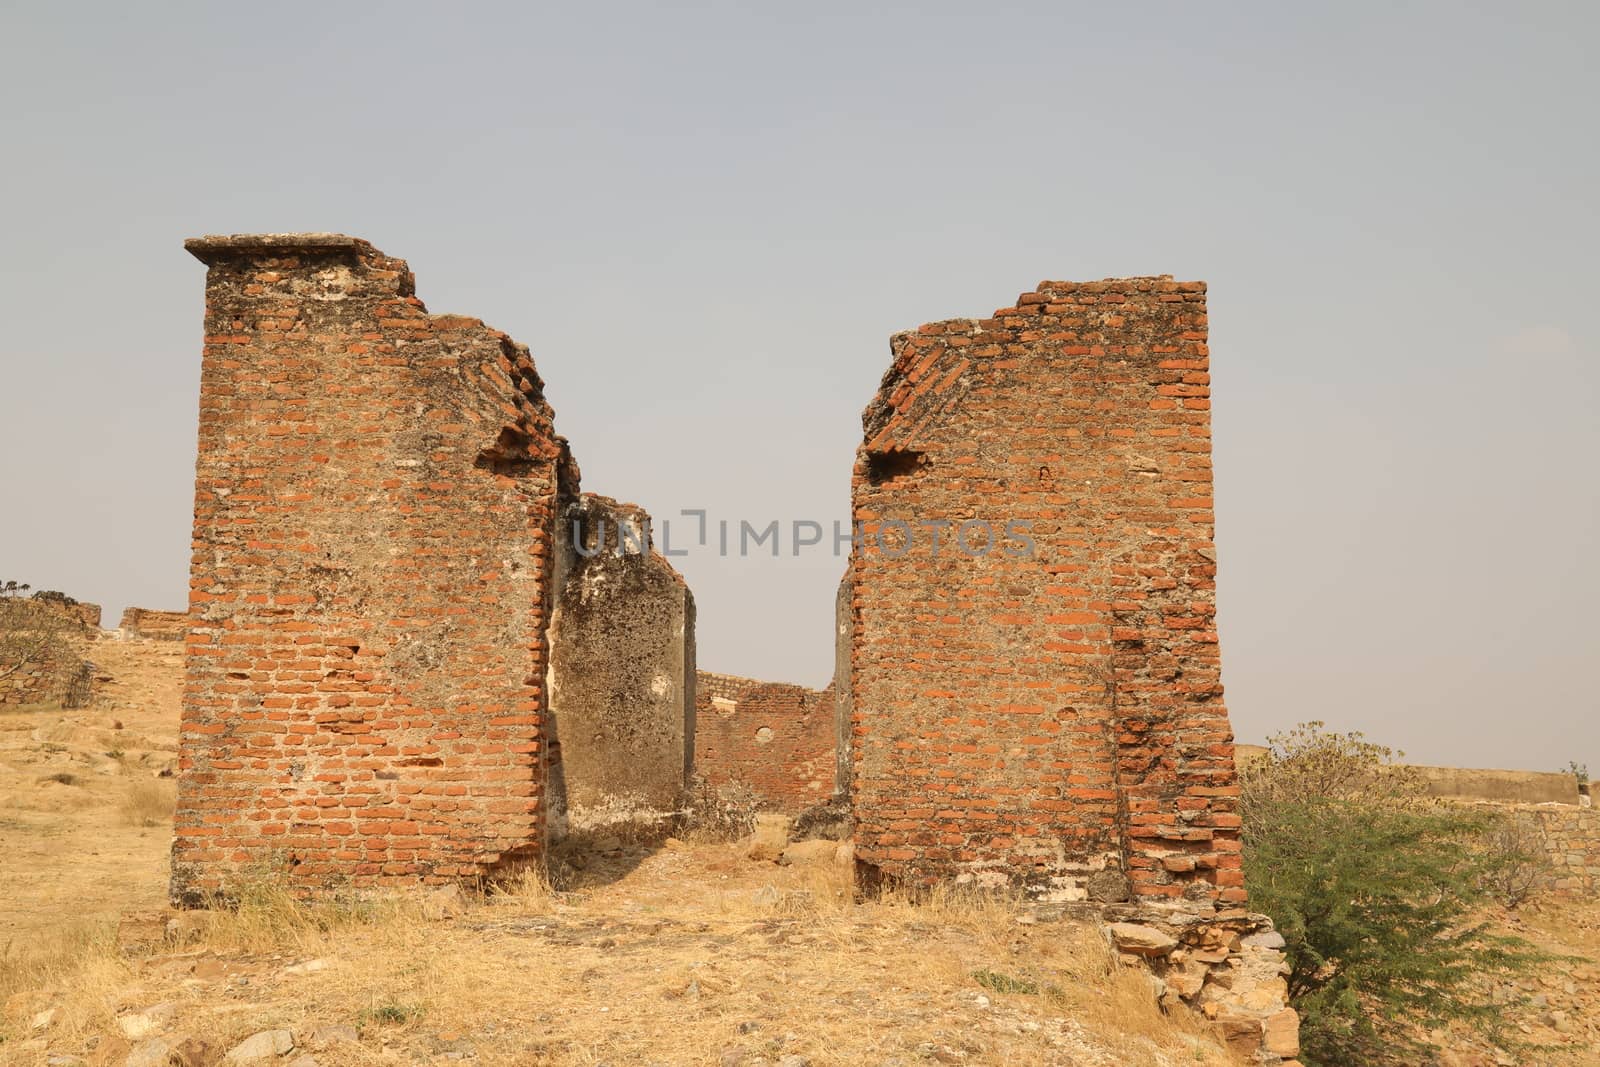 Heritage Fort Rajasthan India